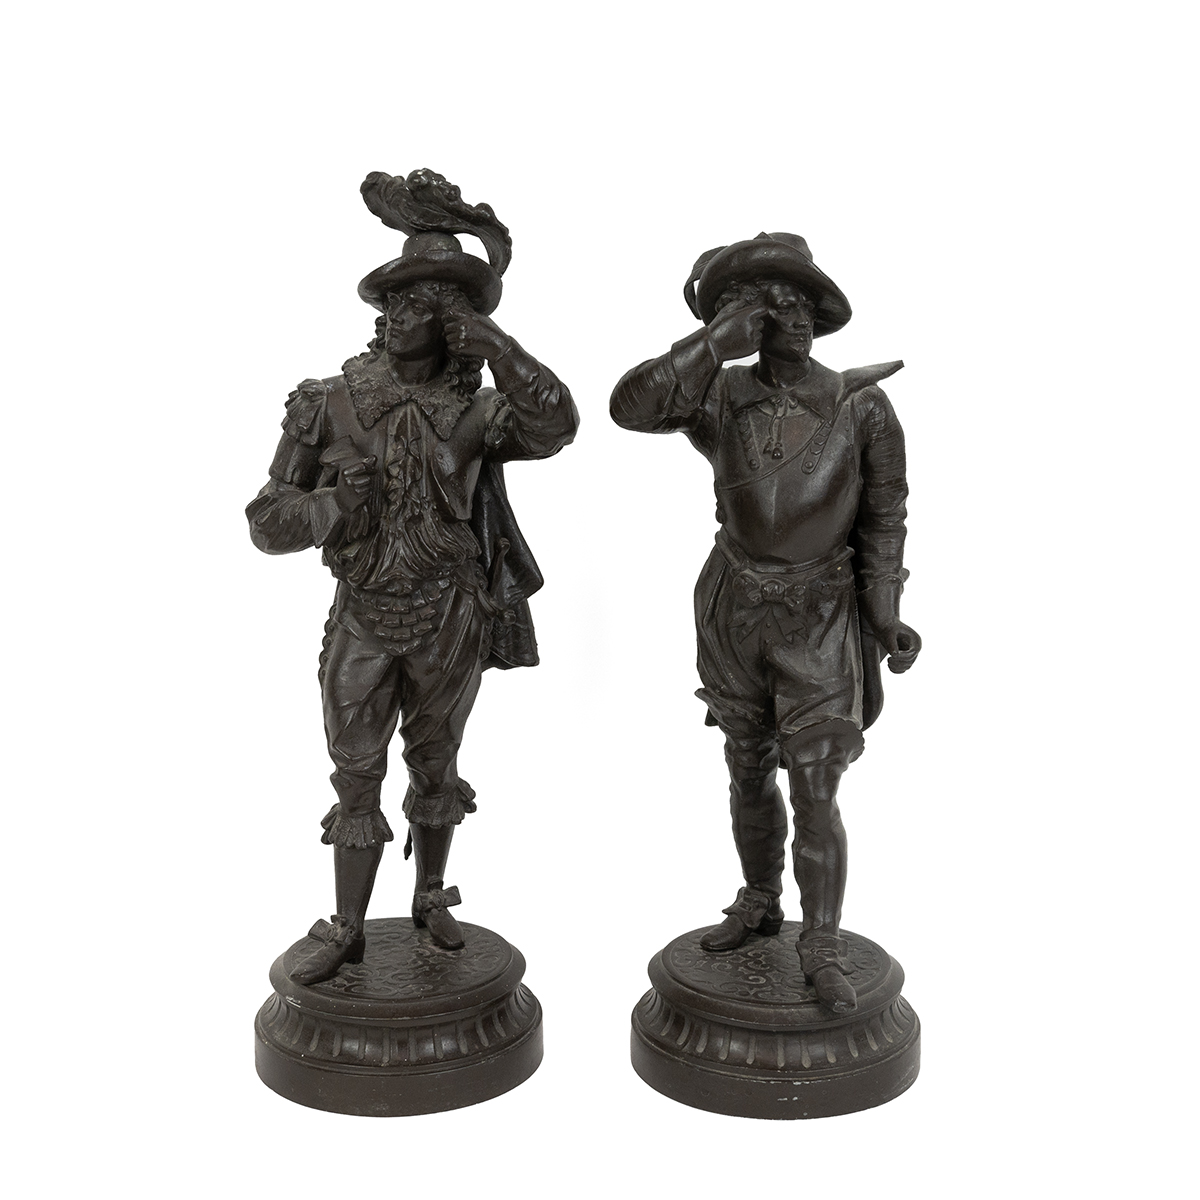 Pair of Spelter figures of Cavaliers. Each standing on raised pedestal bases. Each H 47cm.